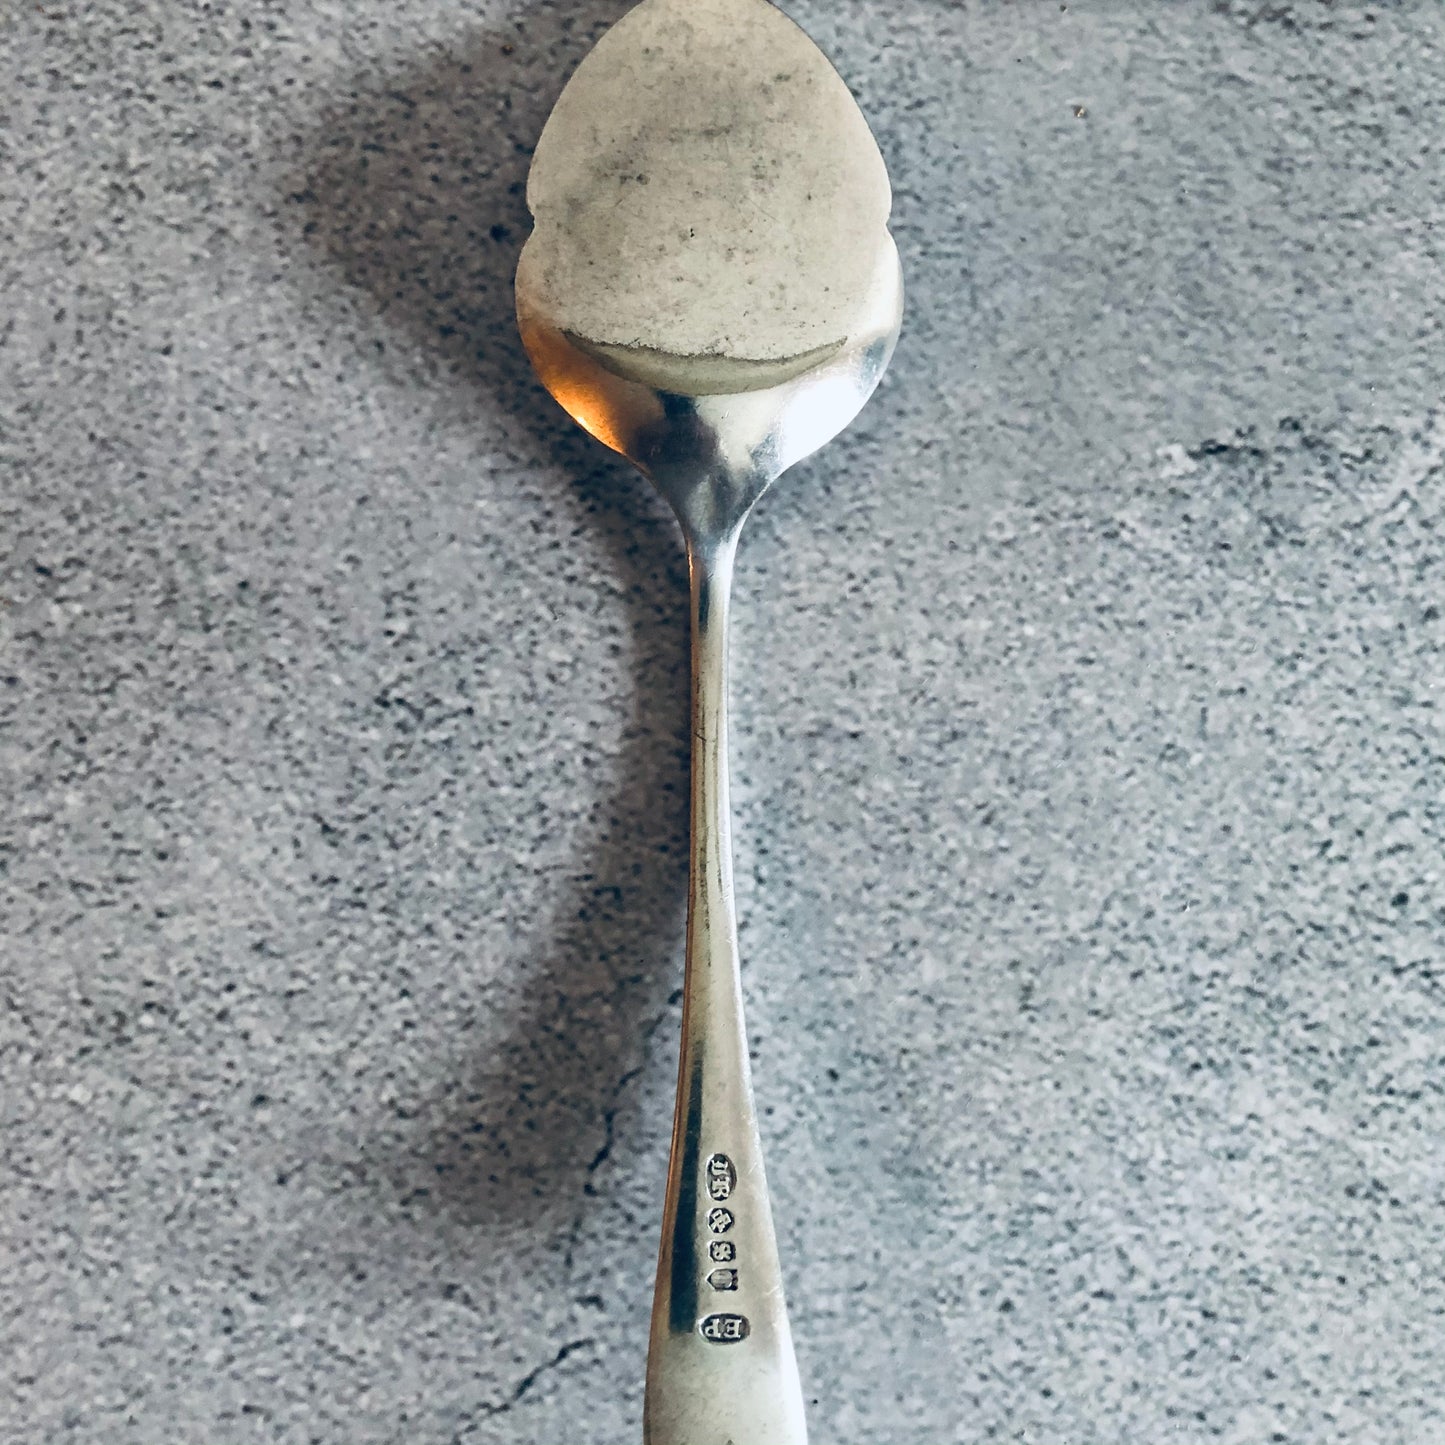 The Headhunter Fredrick - Antique Engraved Jam / Dessert Spoon